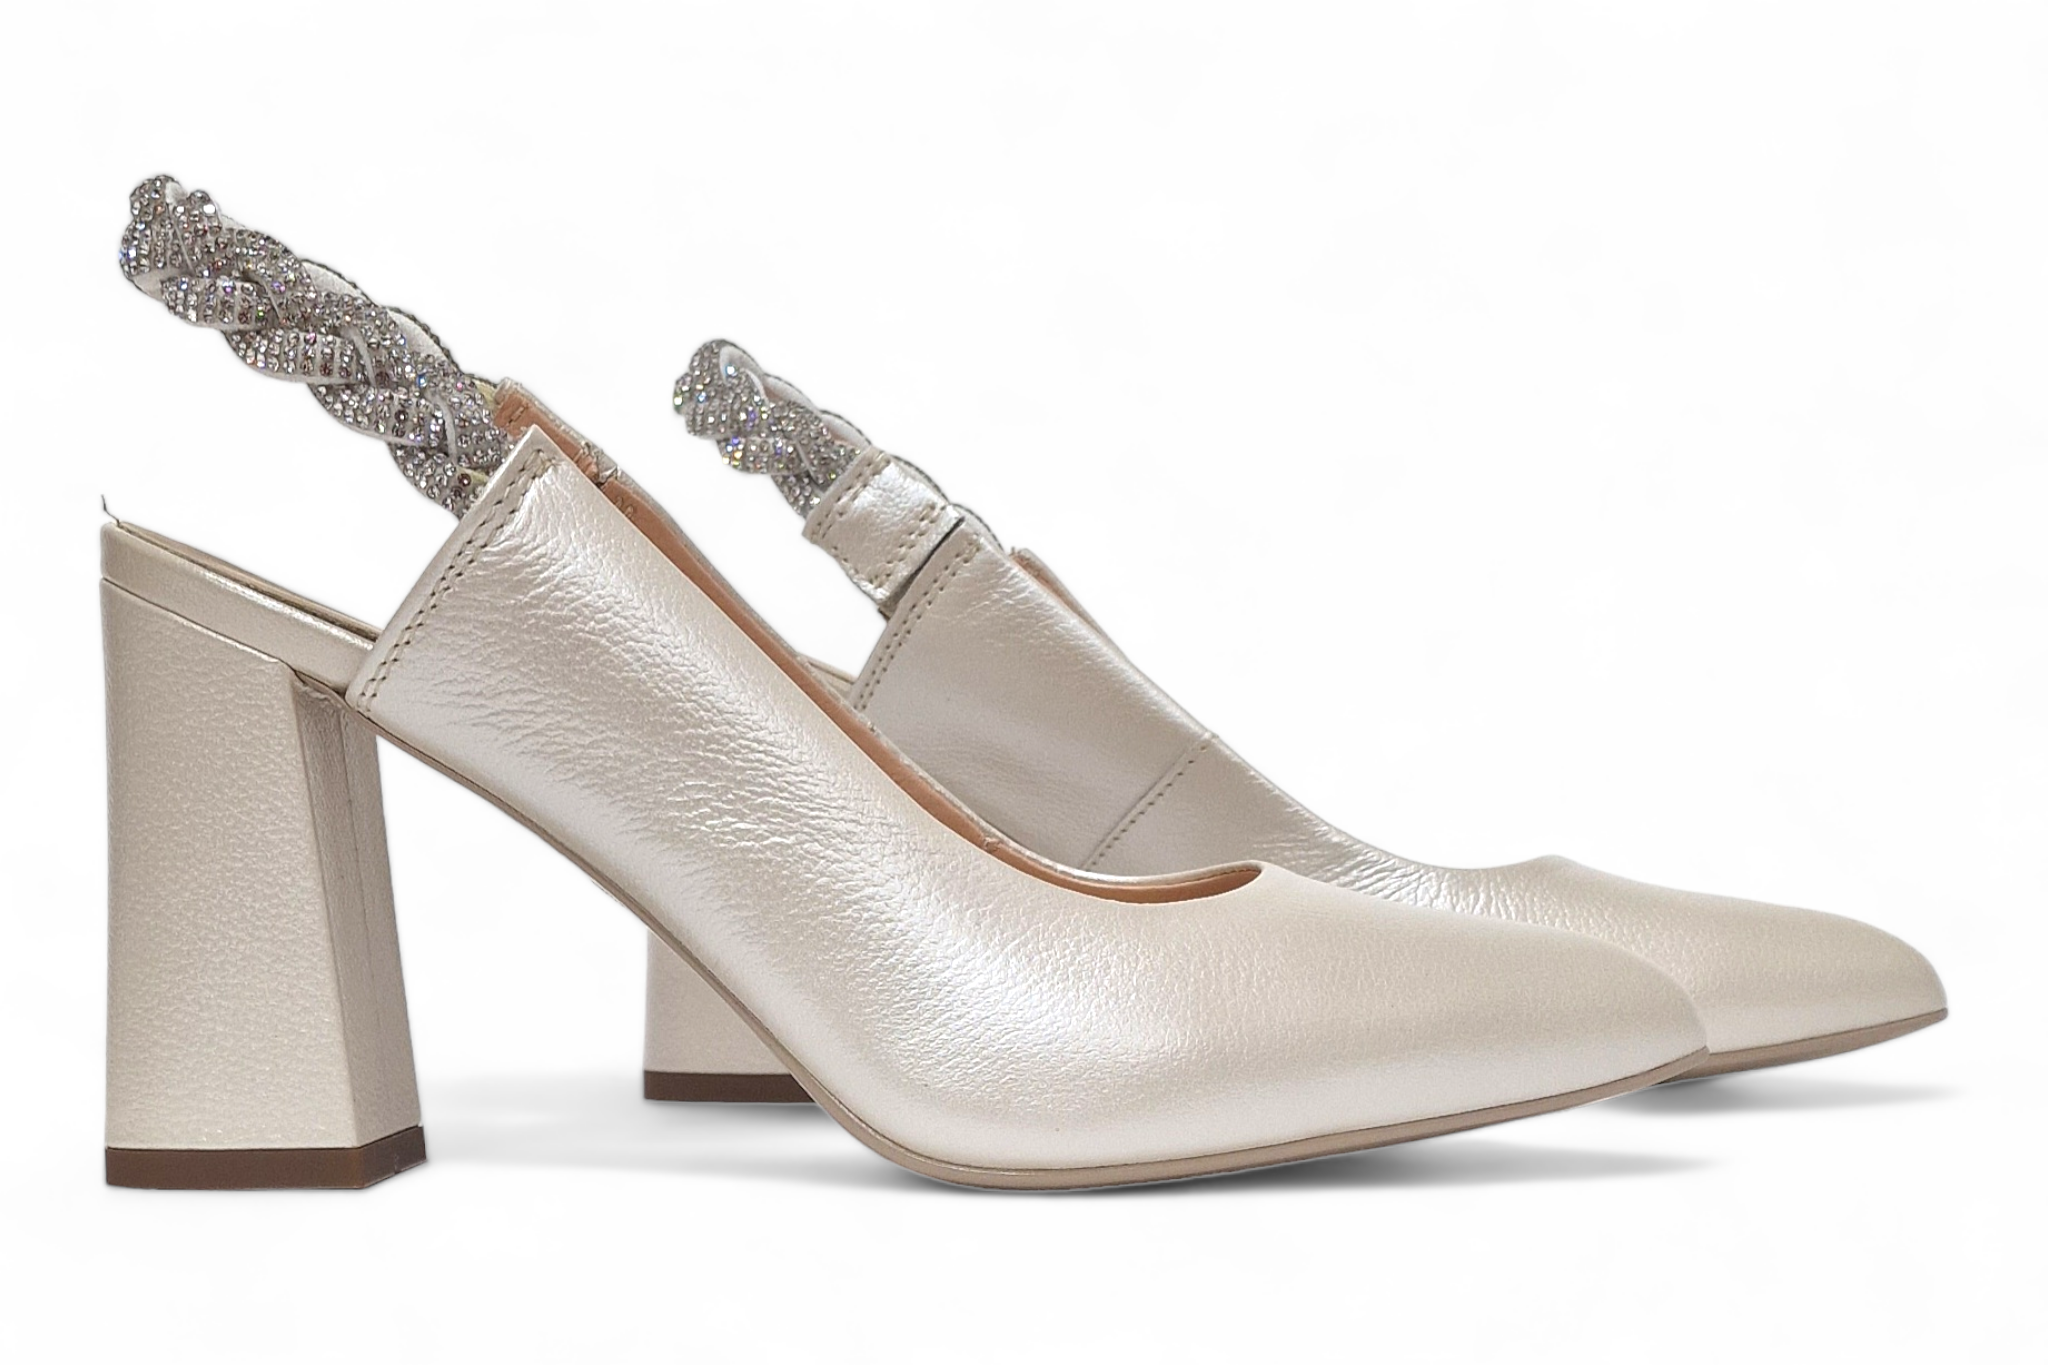 Pantofi dama eleganti piele naturala SALA dec 9954 ivory